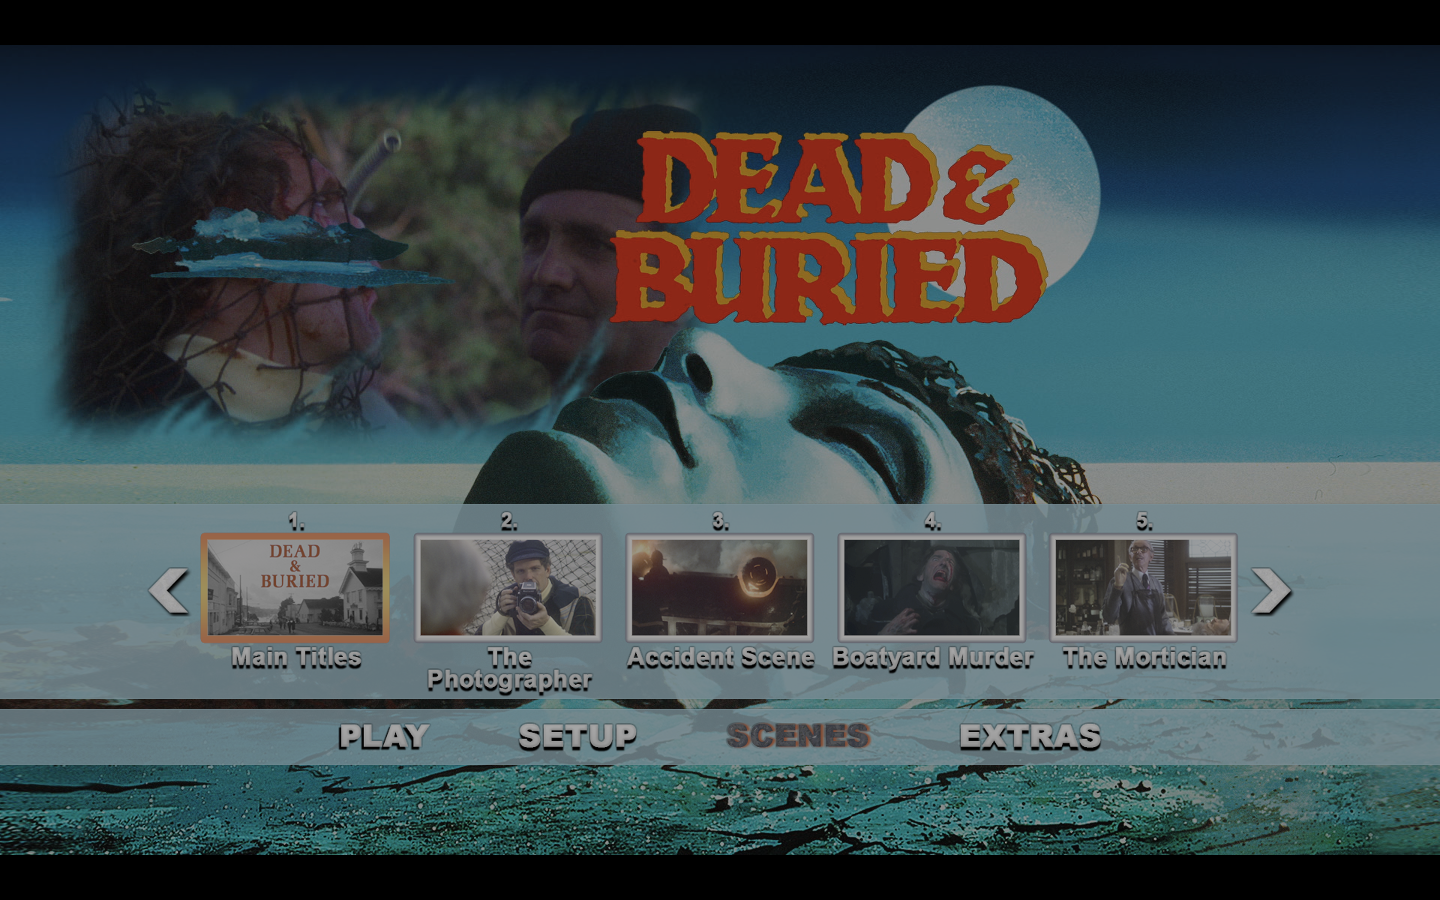 Dead & Buried 4K UHD scene select menu